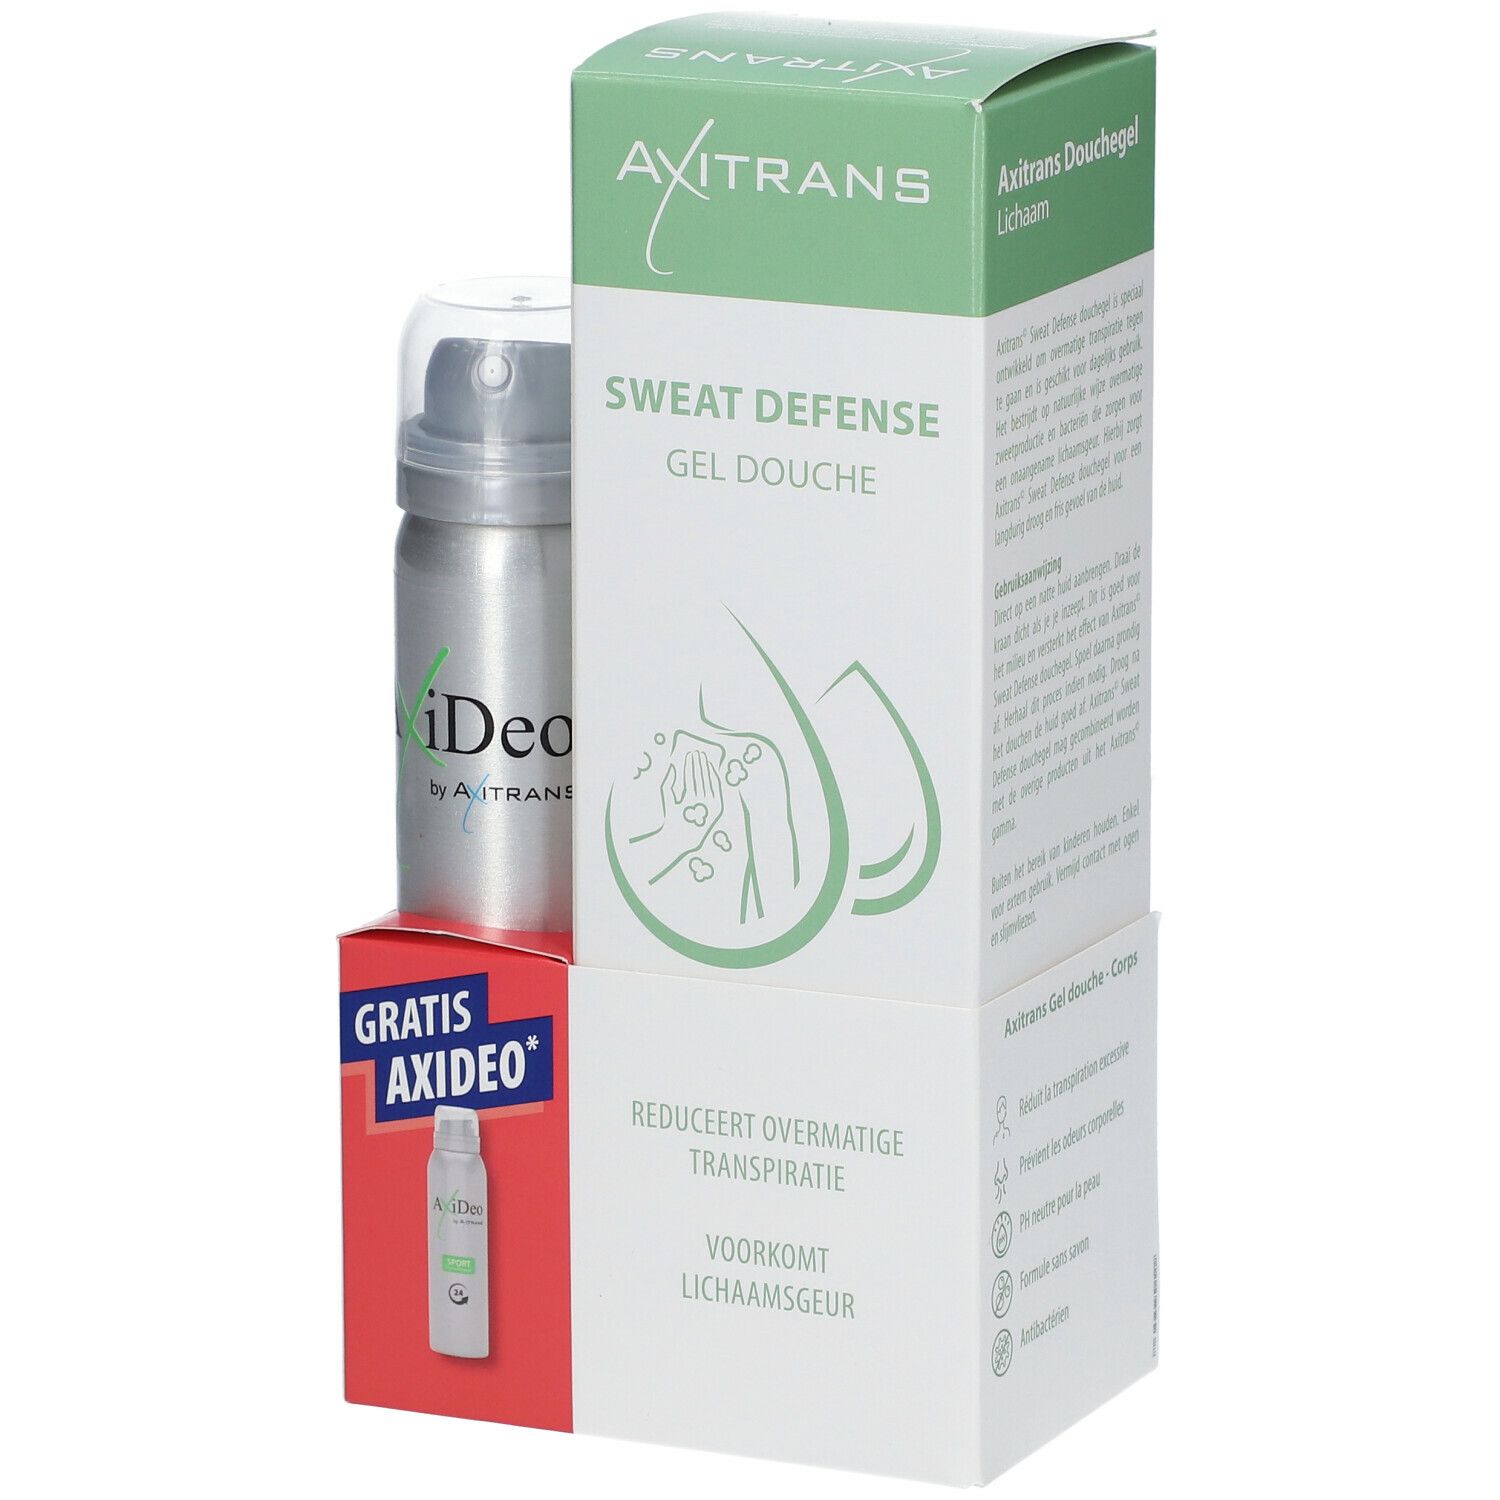 Axitrans Sweat Defense Gel douche + AxiDeo Sports Spray